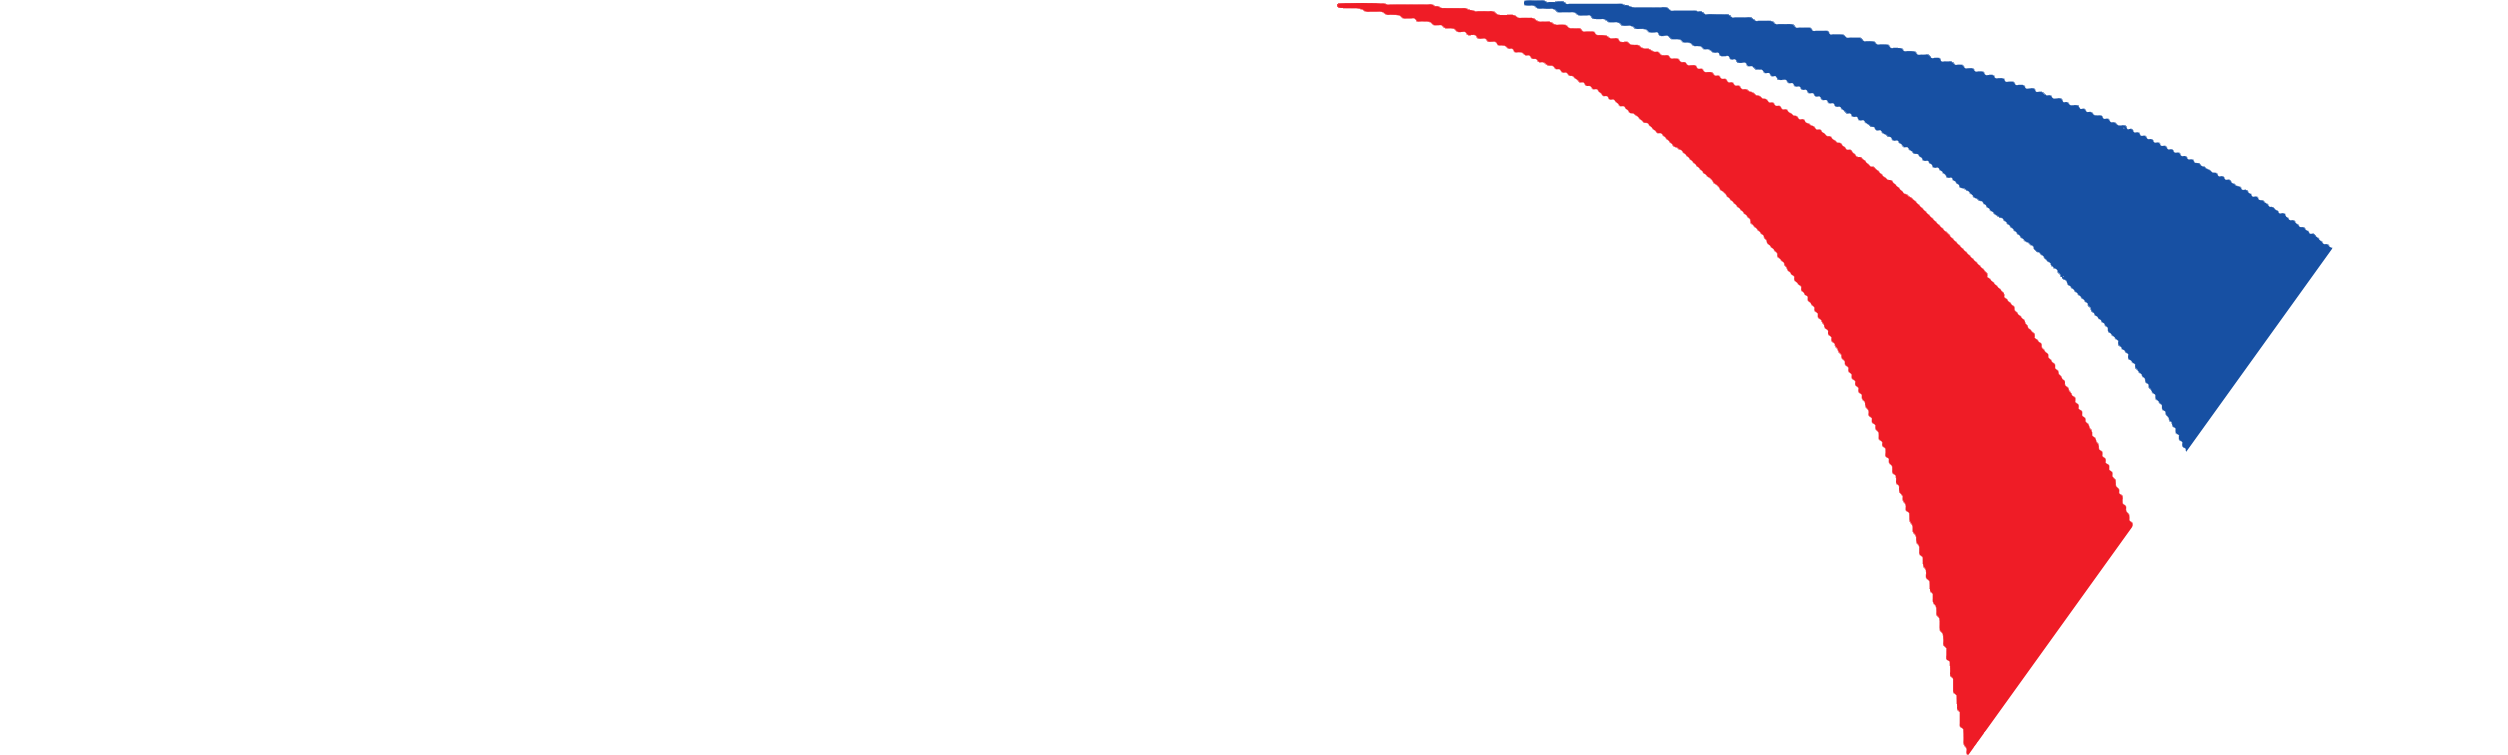 РТР Планета логотип 2002